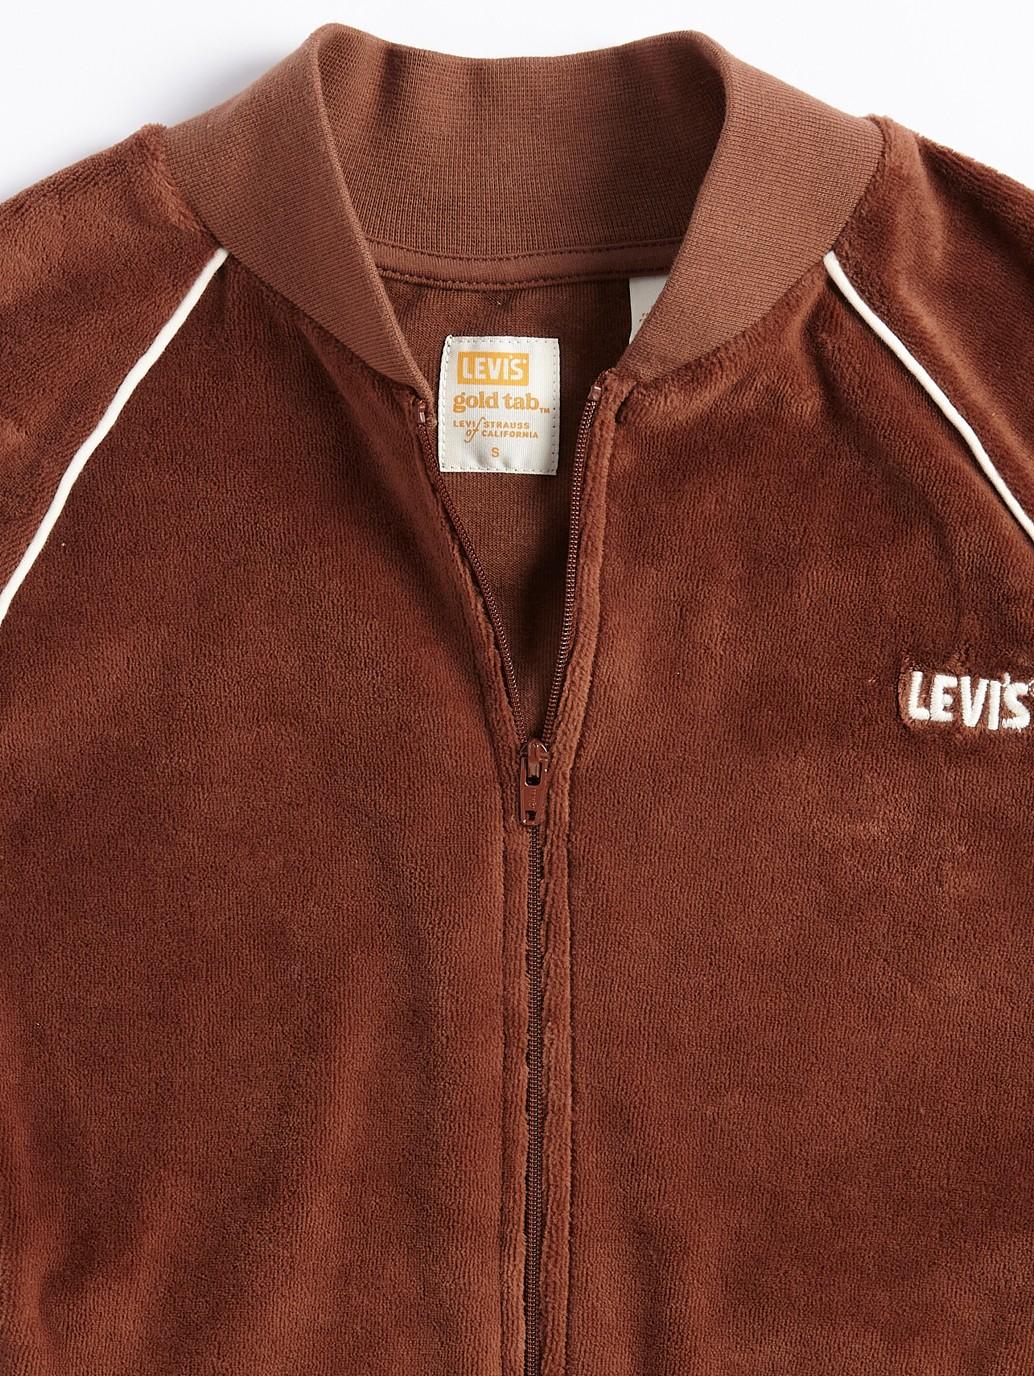 Levi's Gold Tab Baseball Jacket - Women's - Puce S